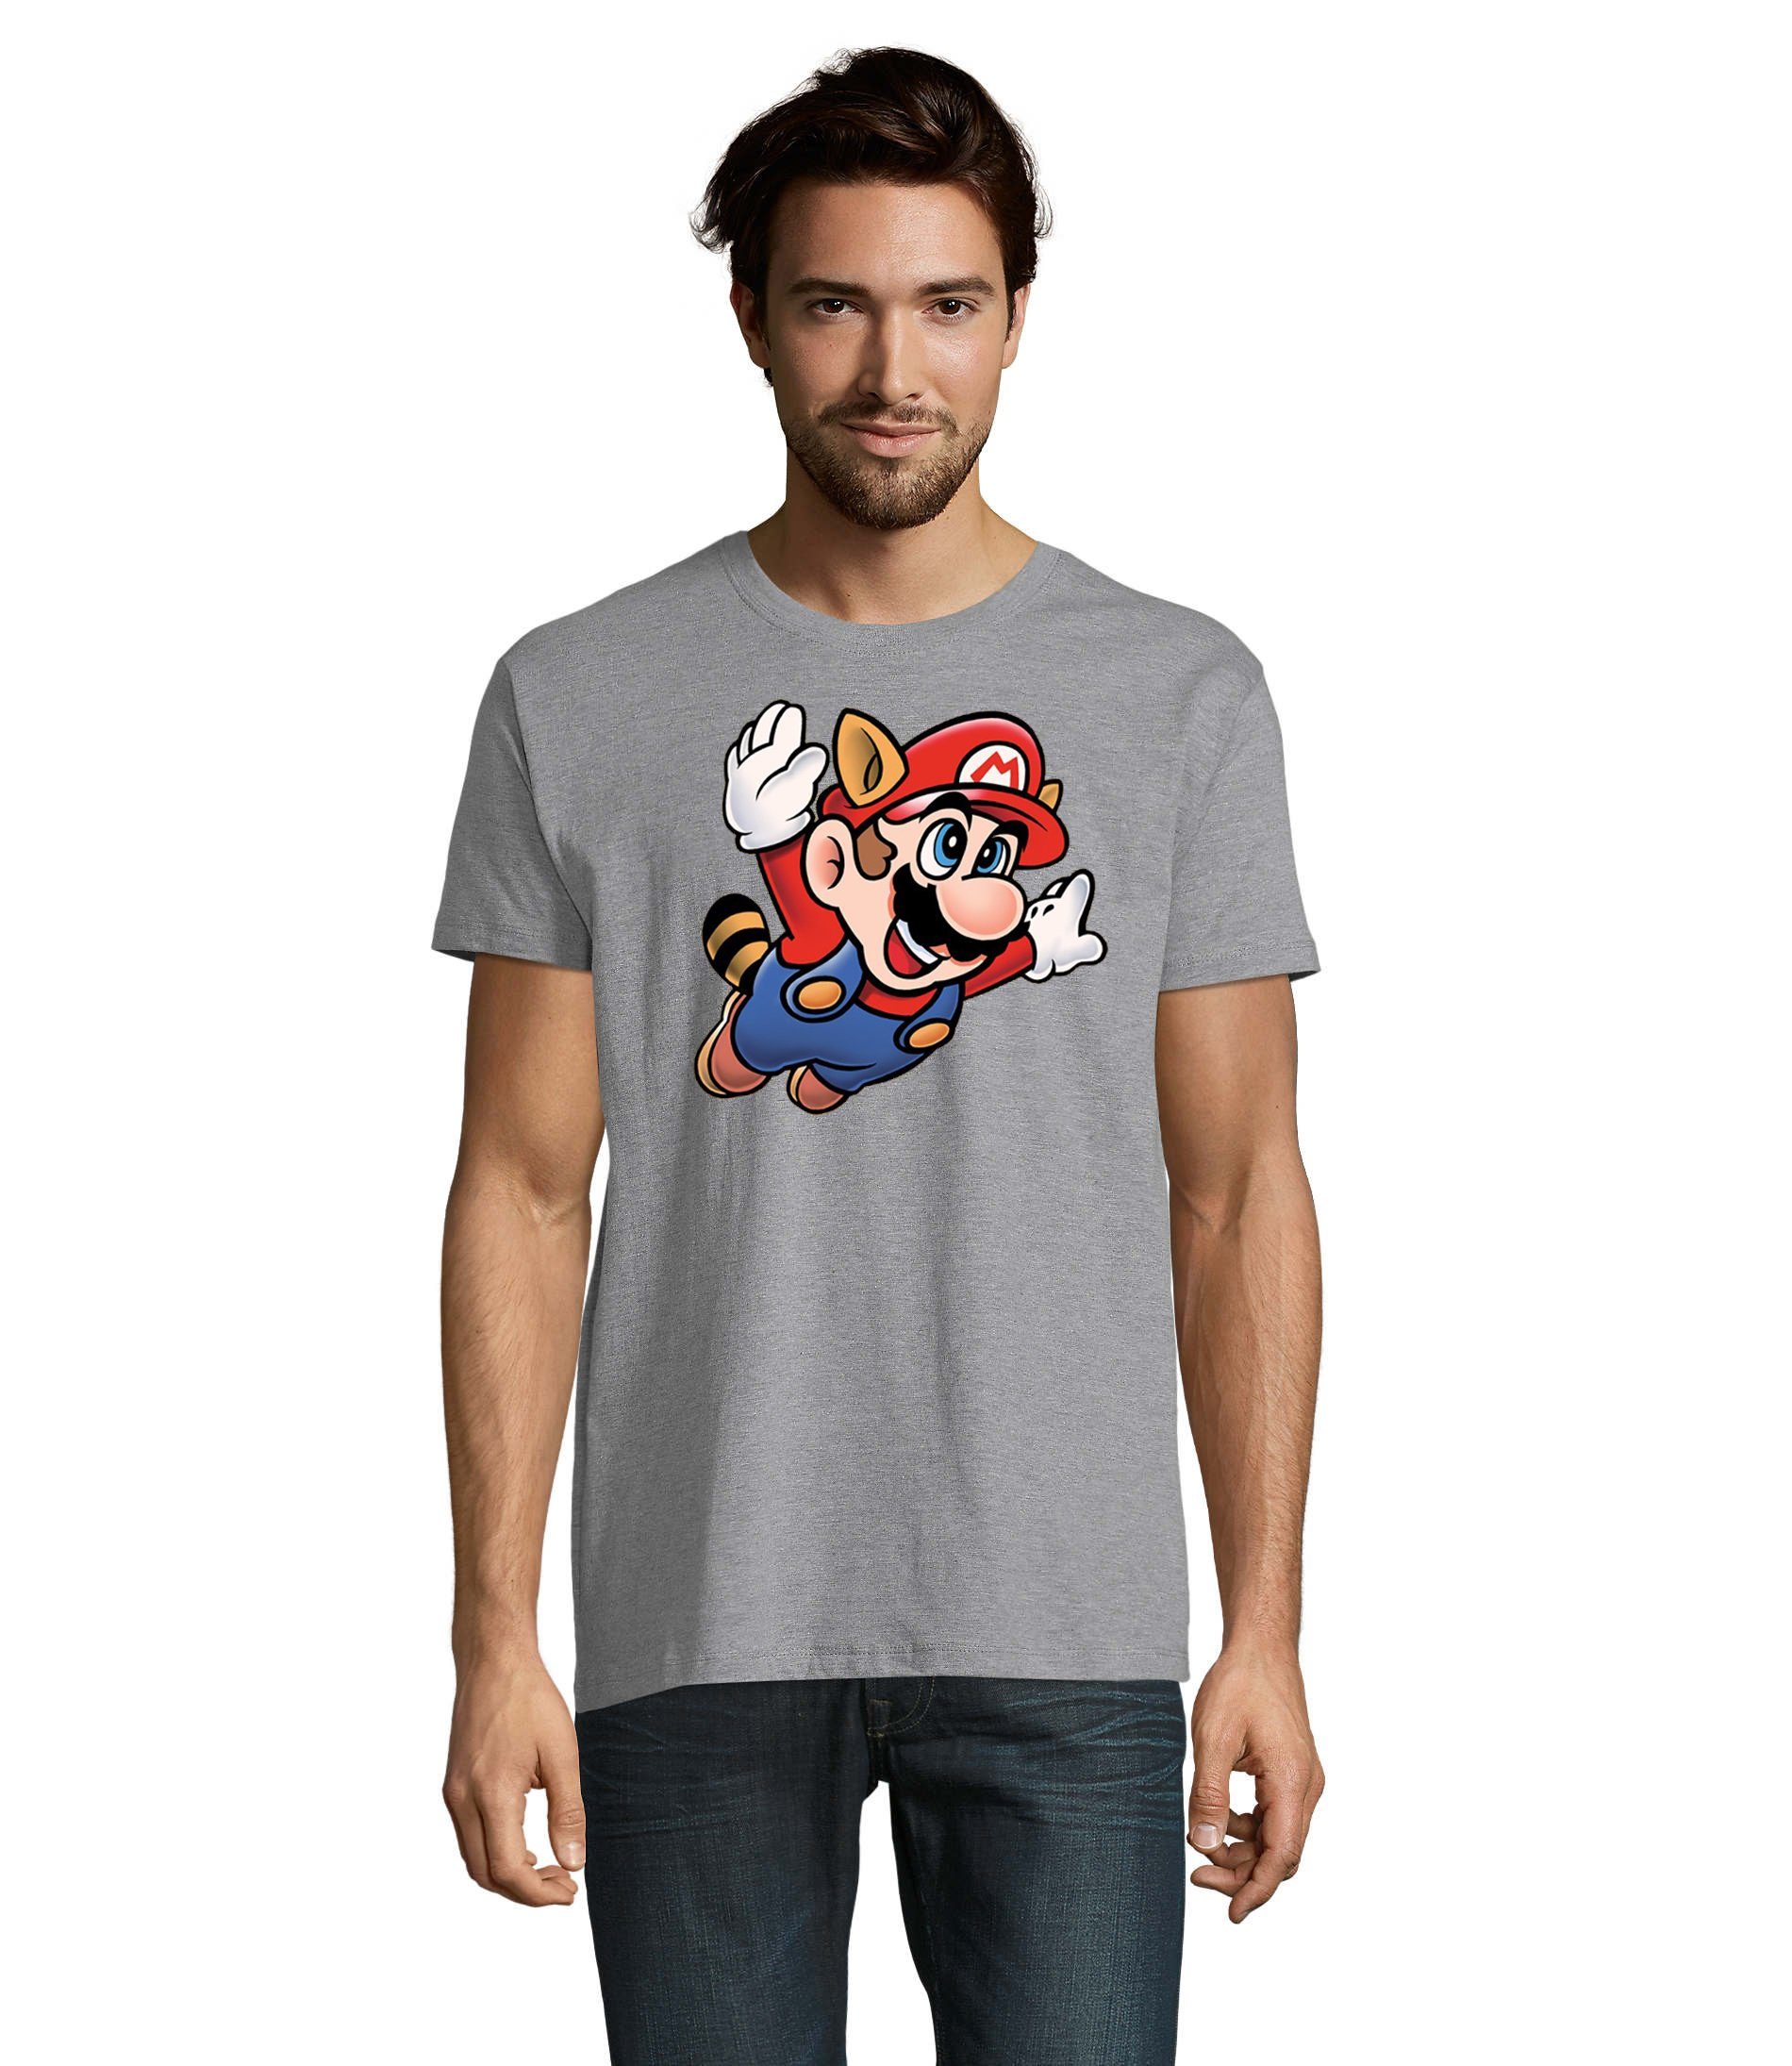 Blondie Brownie Herren Super Mario Nintendo Logo Print 3 T-Shirt Grau & Fligh